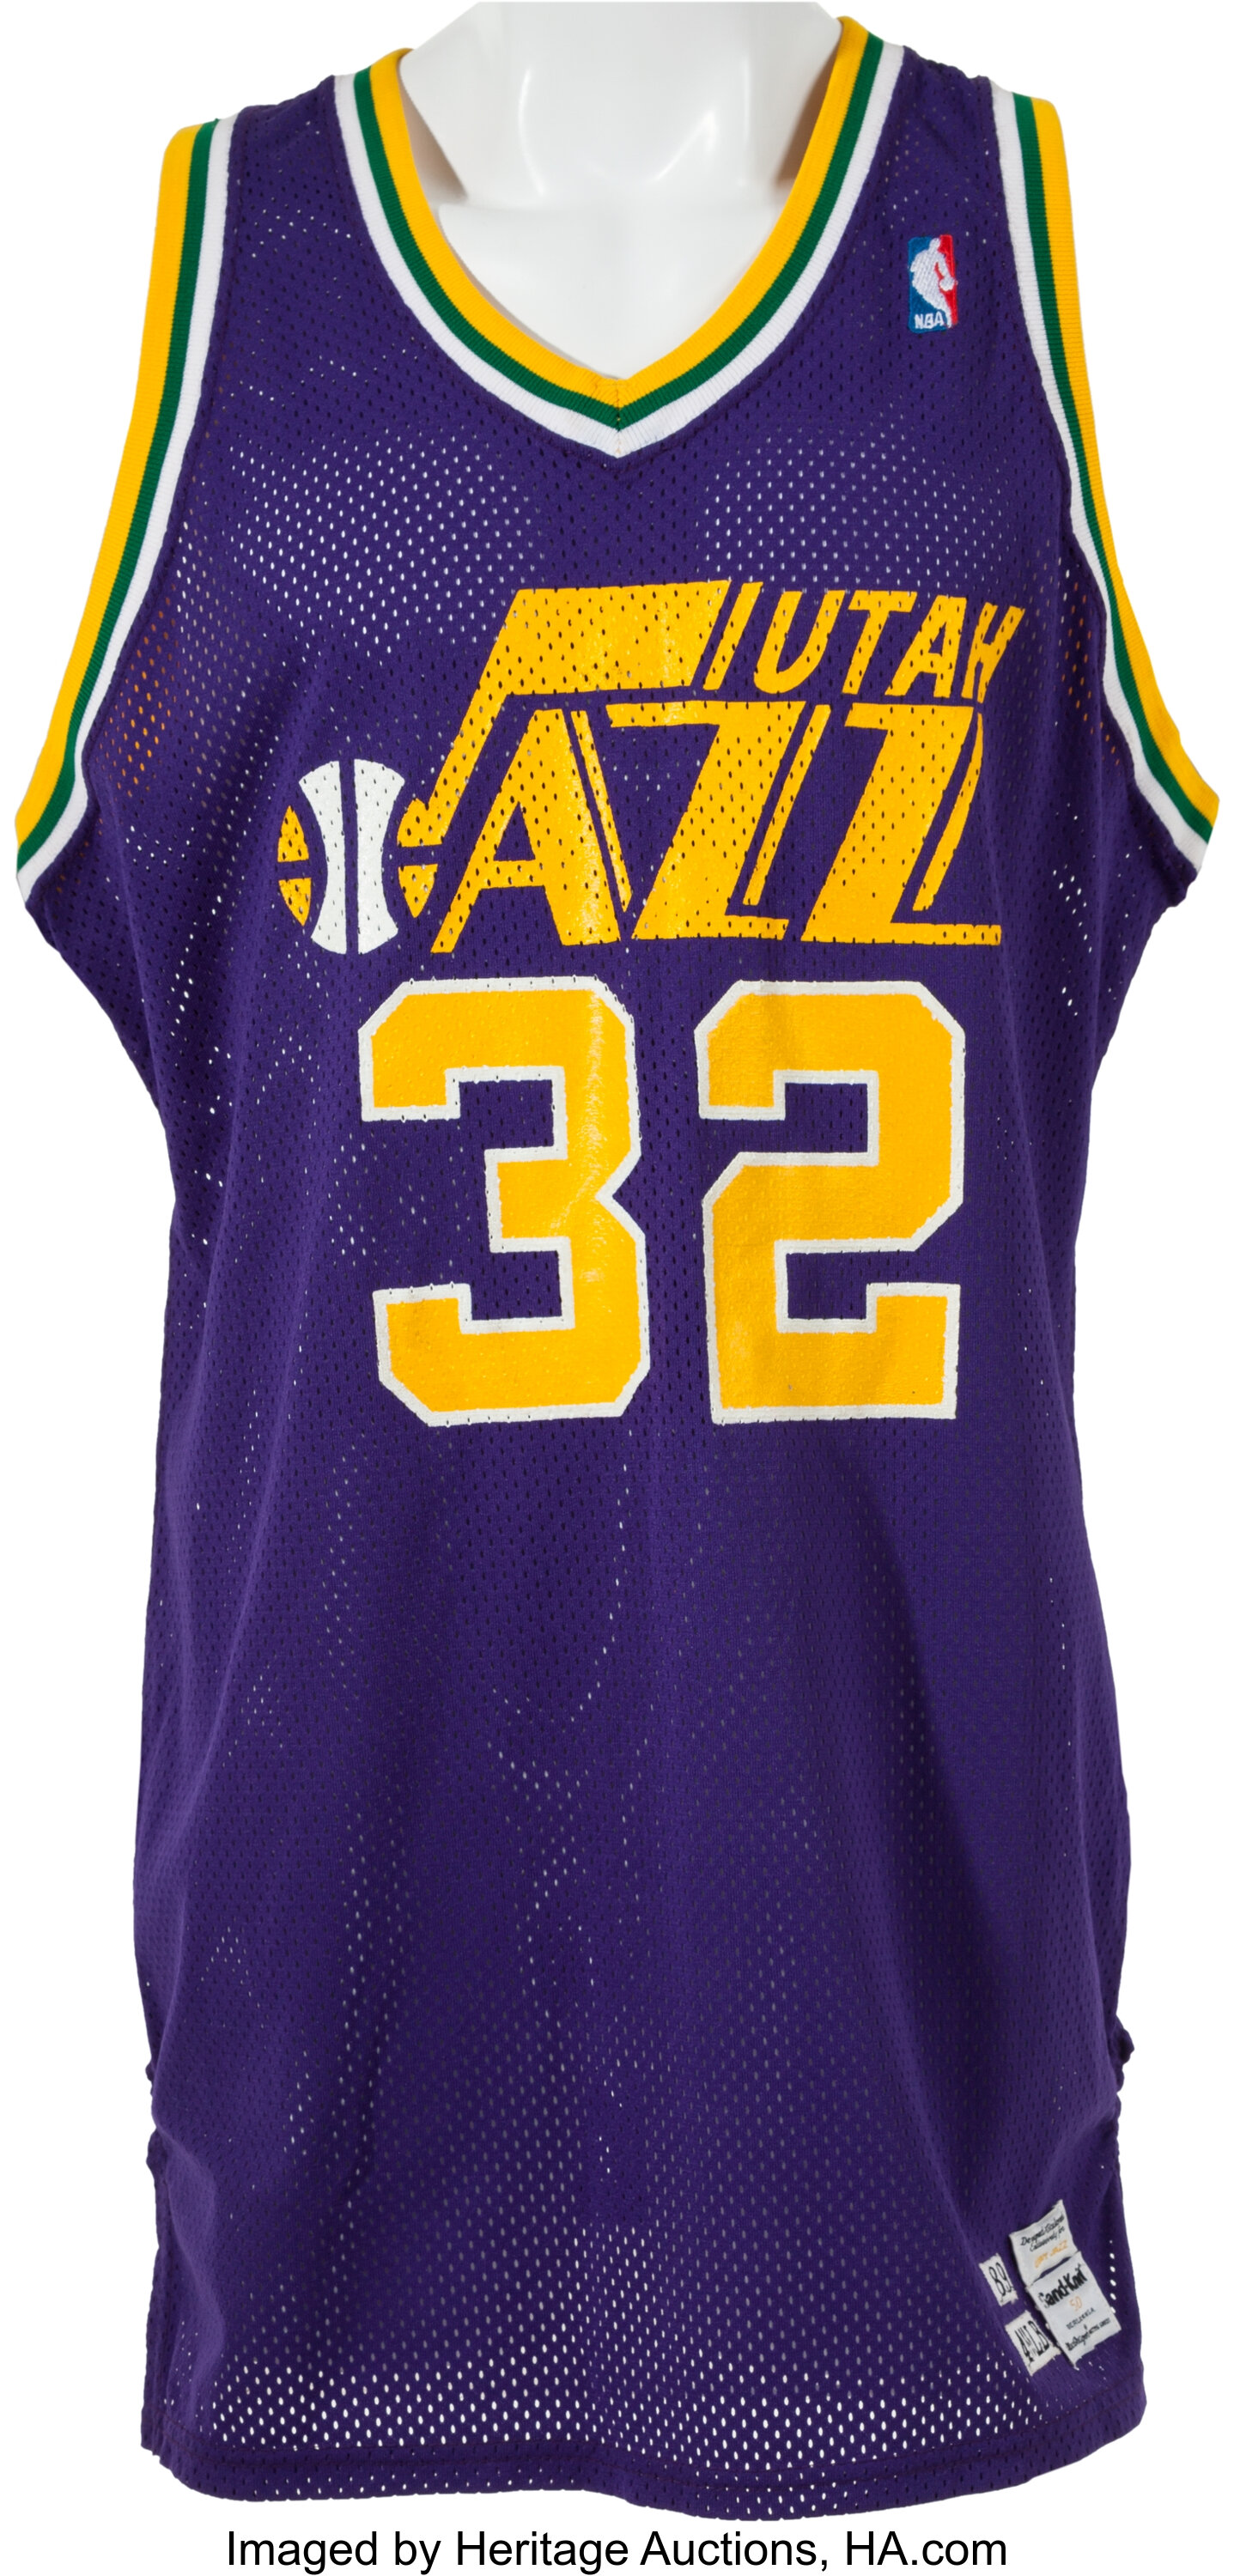 1990s Utah Jazz #15 Game Issued Purple White Practice Reversible